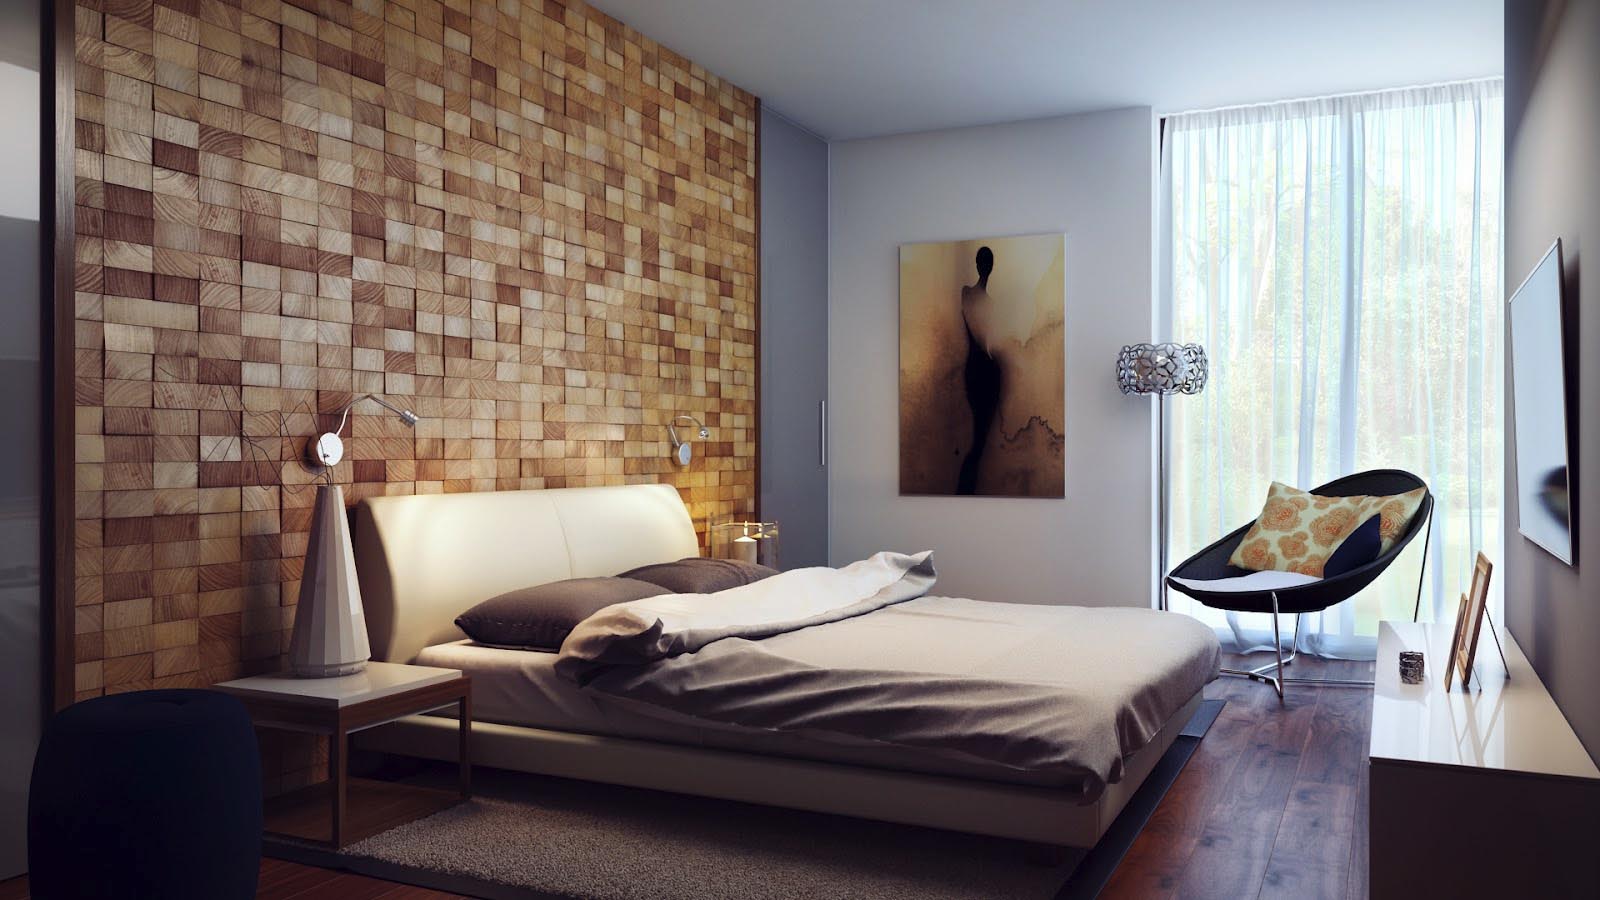 Free download wallpaper designs for bedroom walls Wallpapers [1600x900